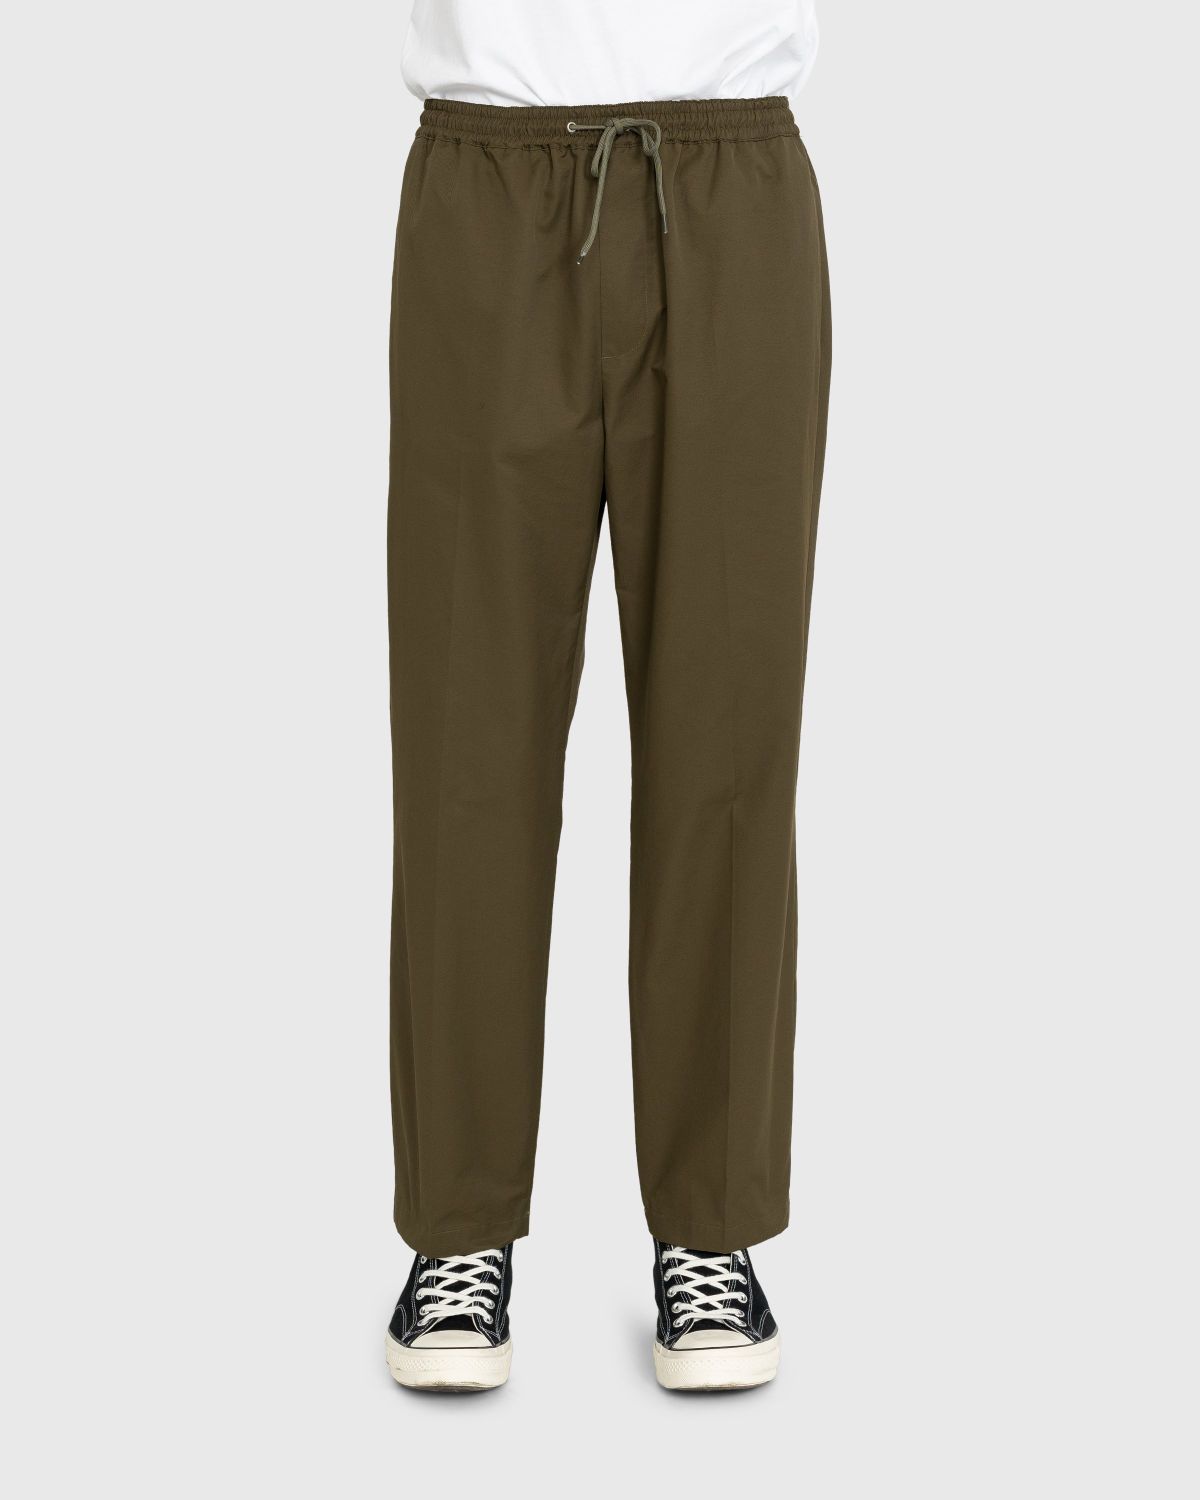 Highsnobiety – Cotton Nylon Elastic Pants Olive - Trousers - Green - Image 3